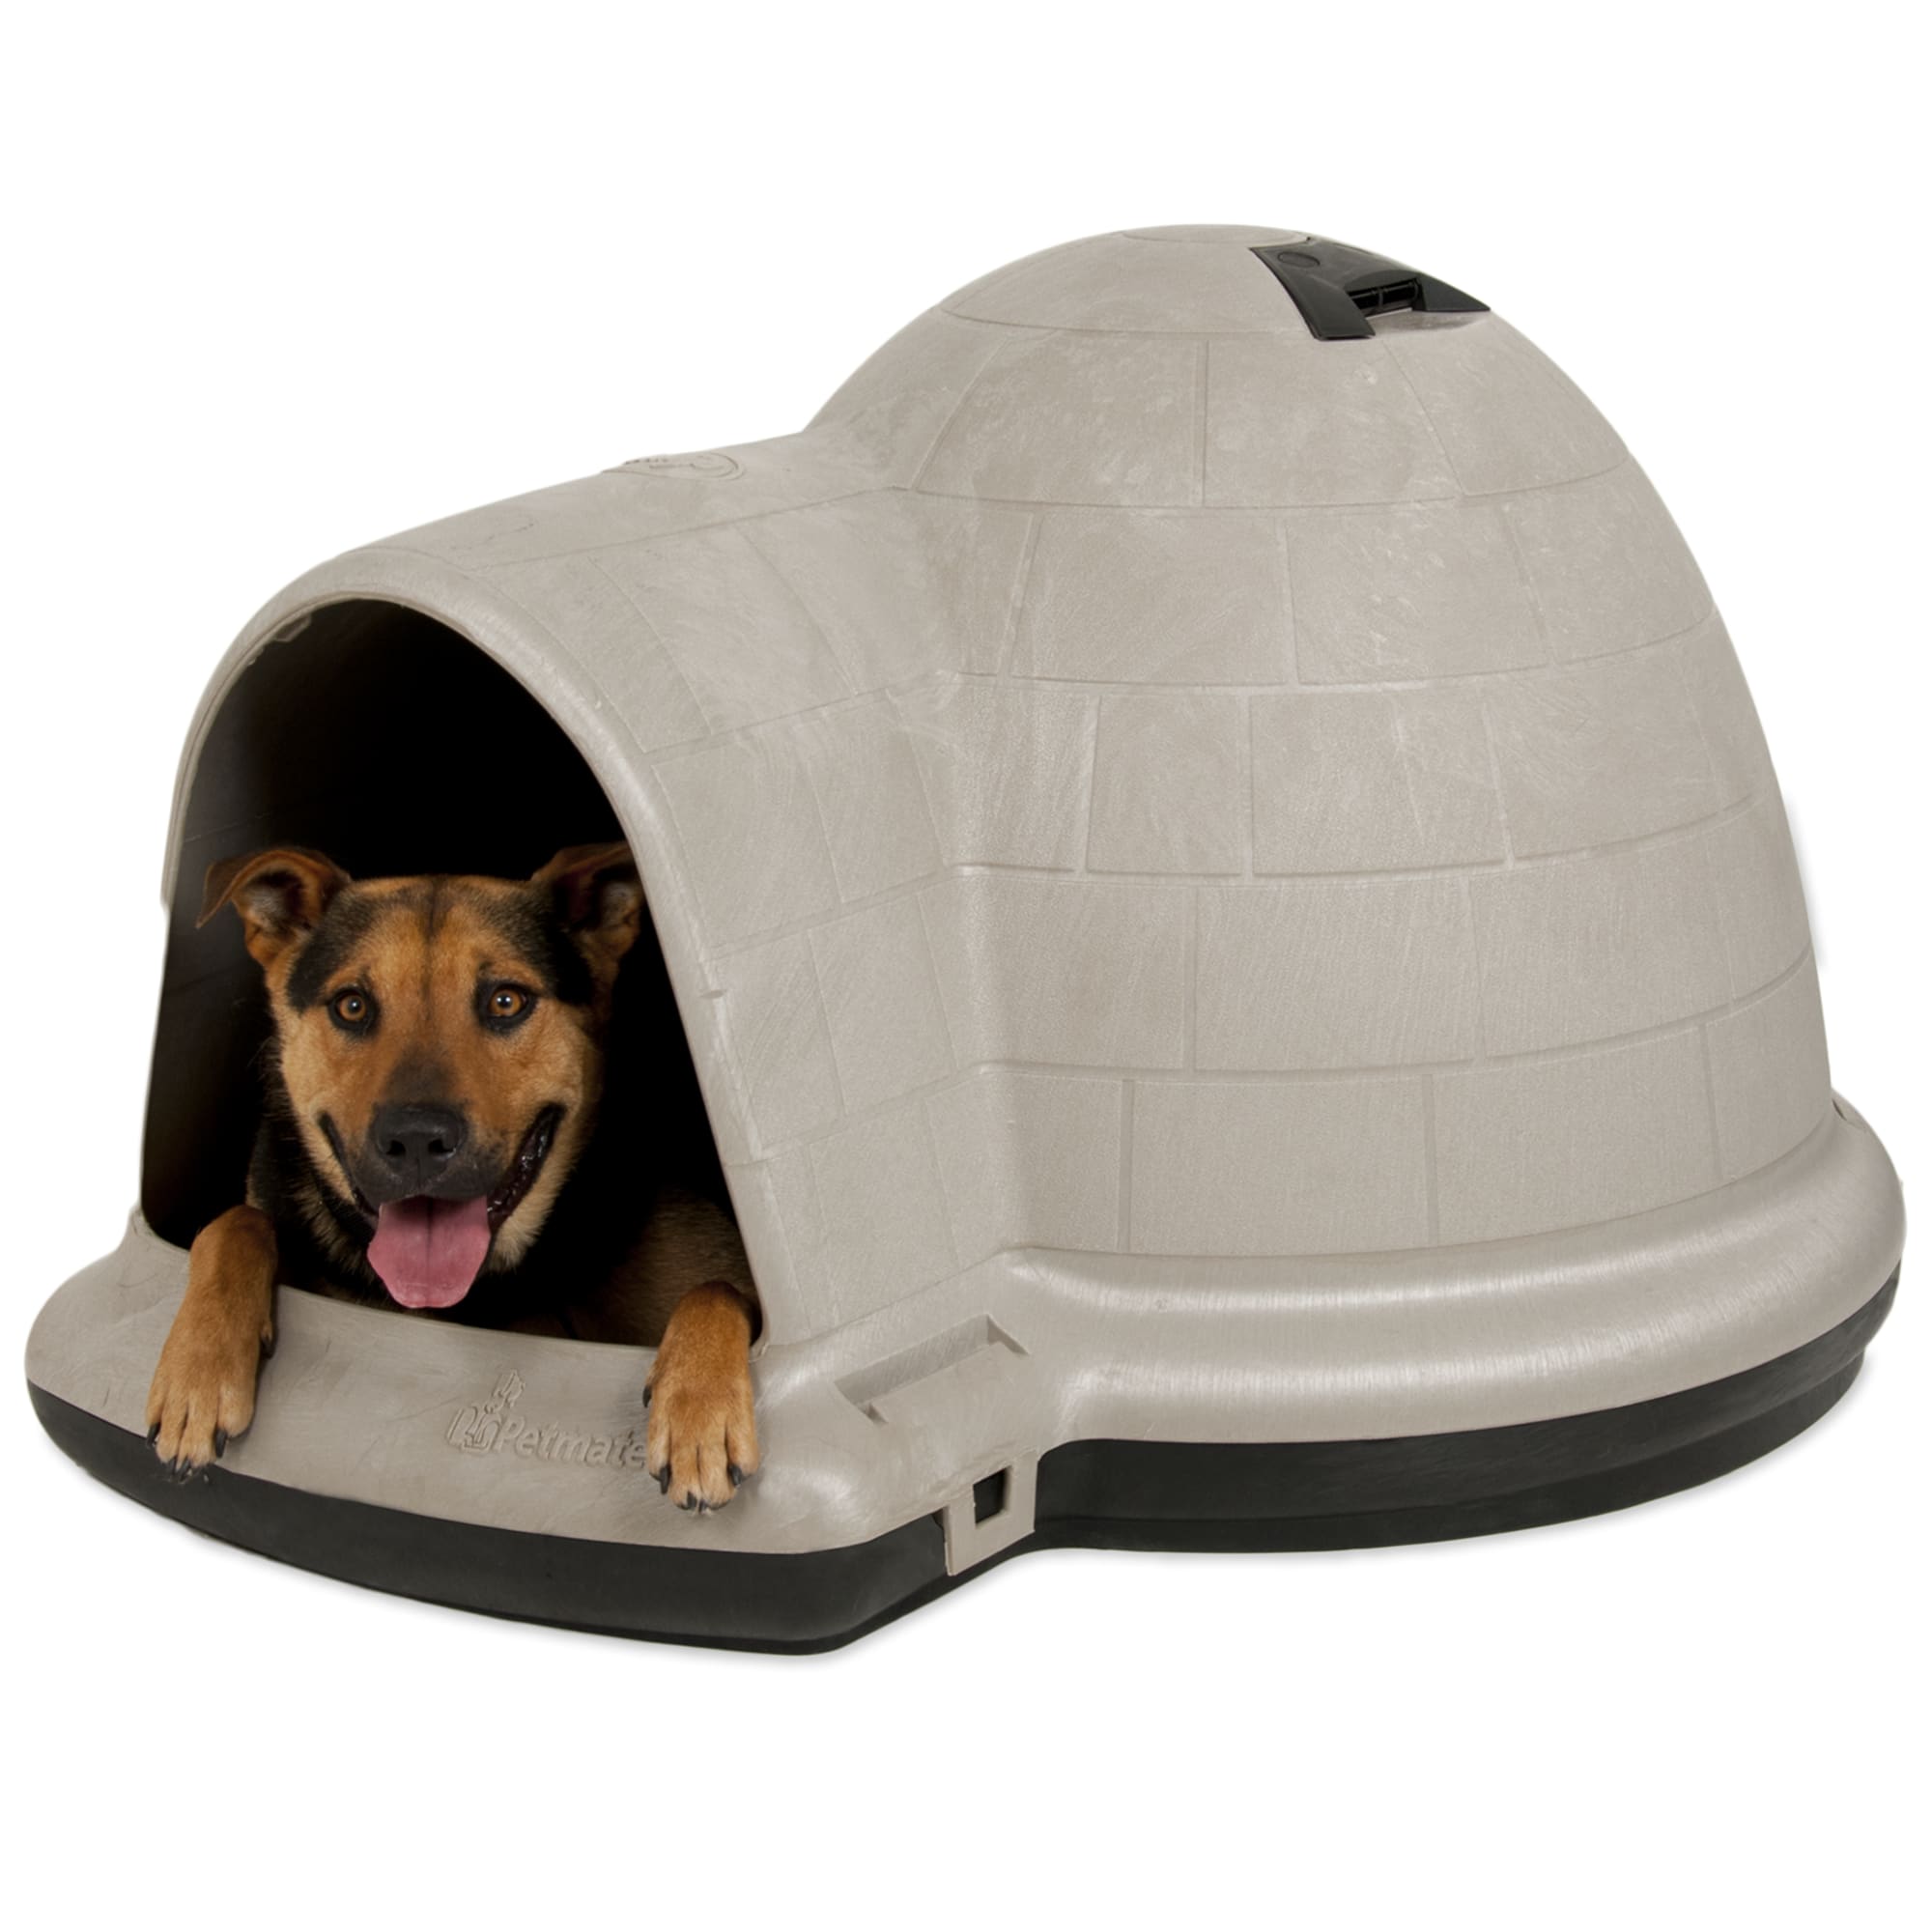 Igloo Dog House: Petmate Indigo Dog Home | Dog Igloo | Petco | 4.4 Stars